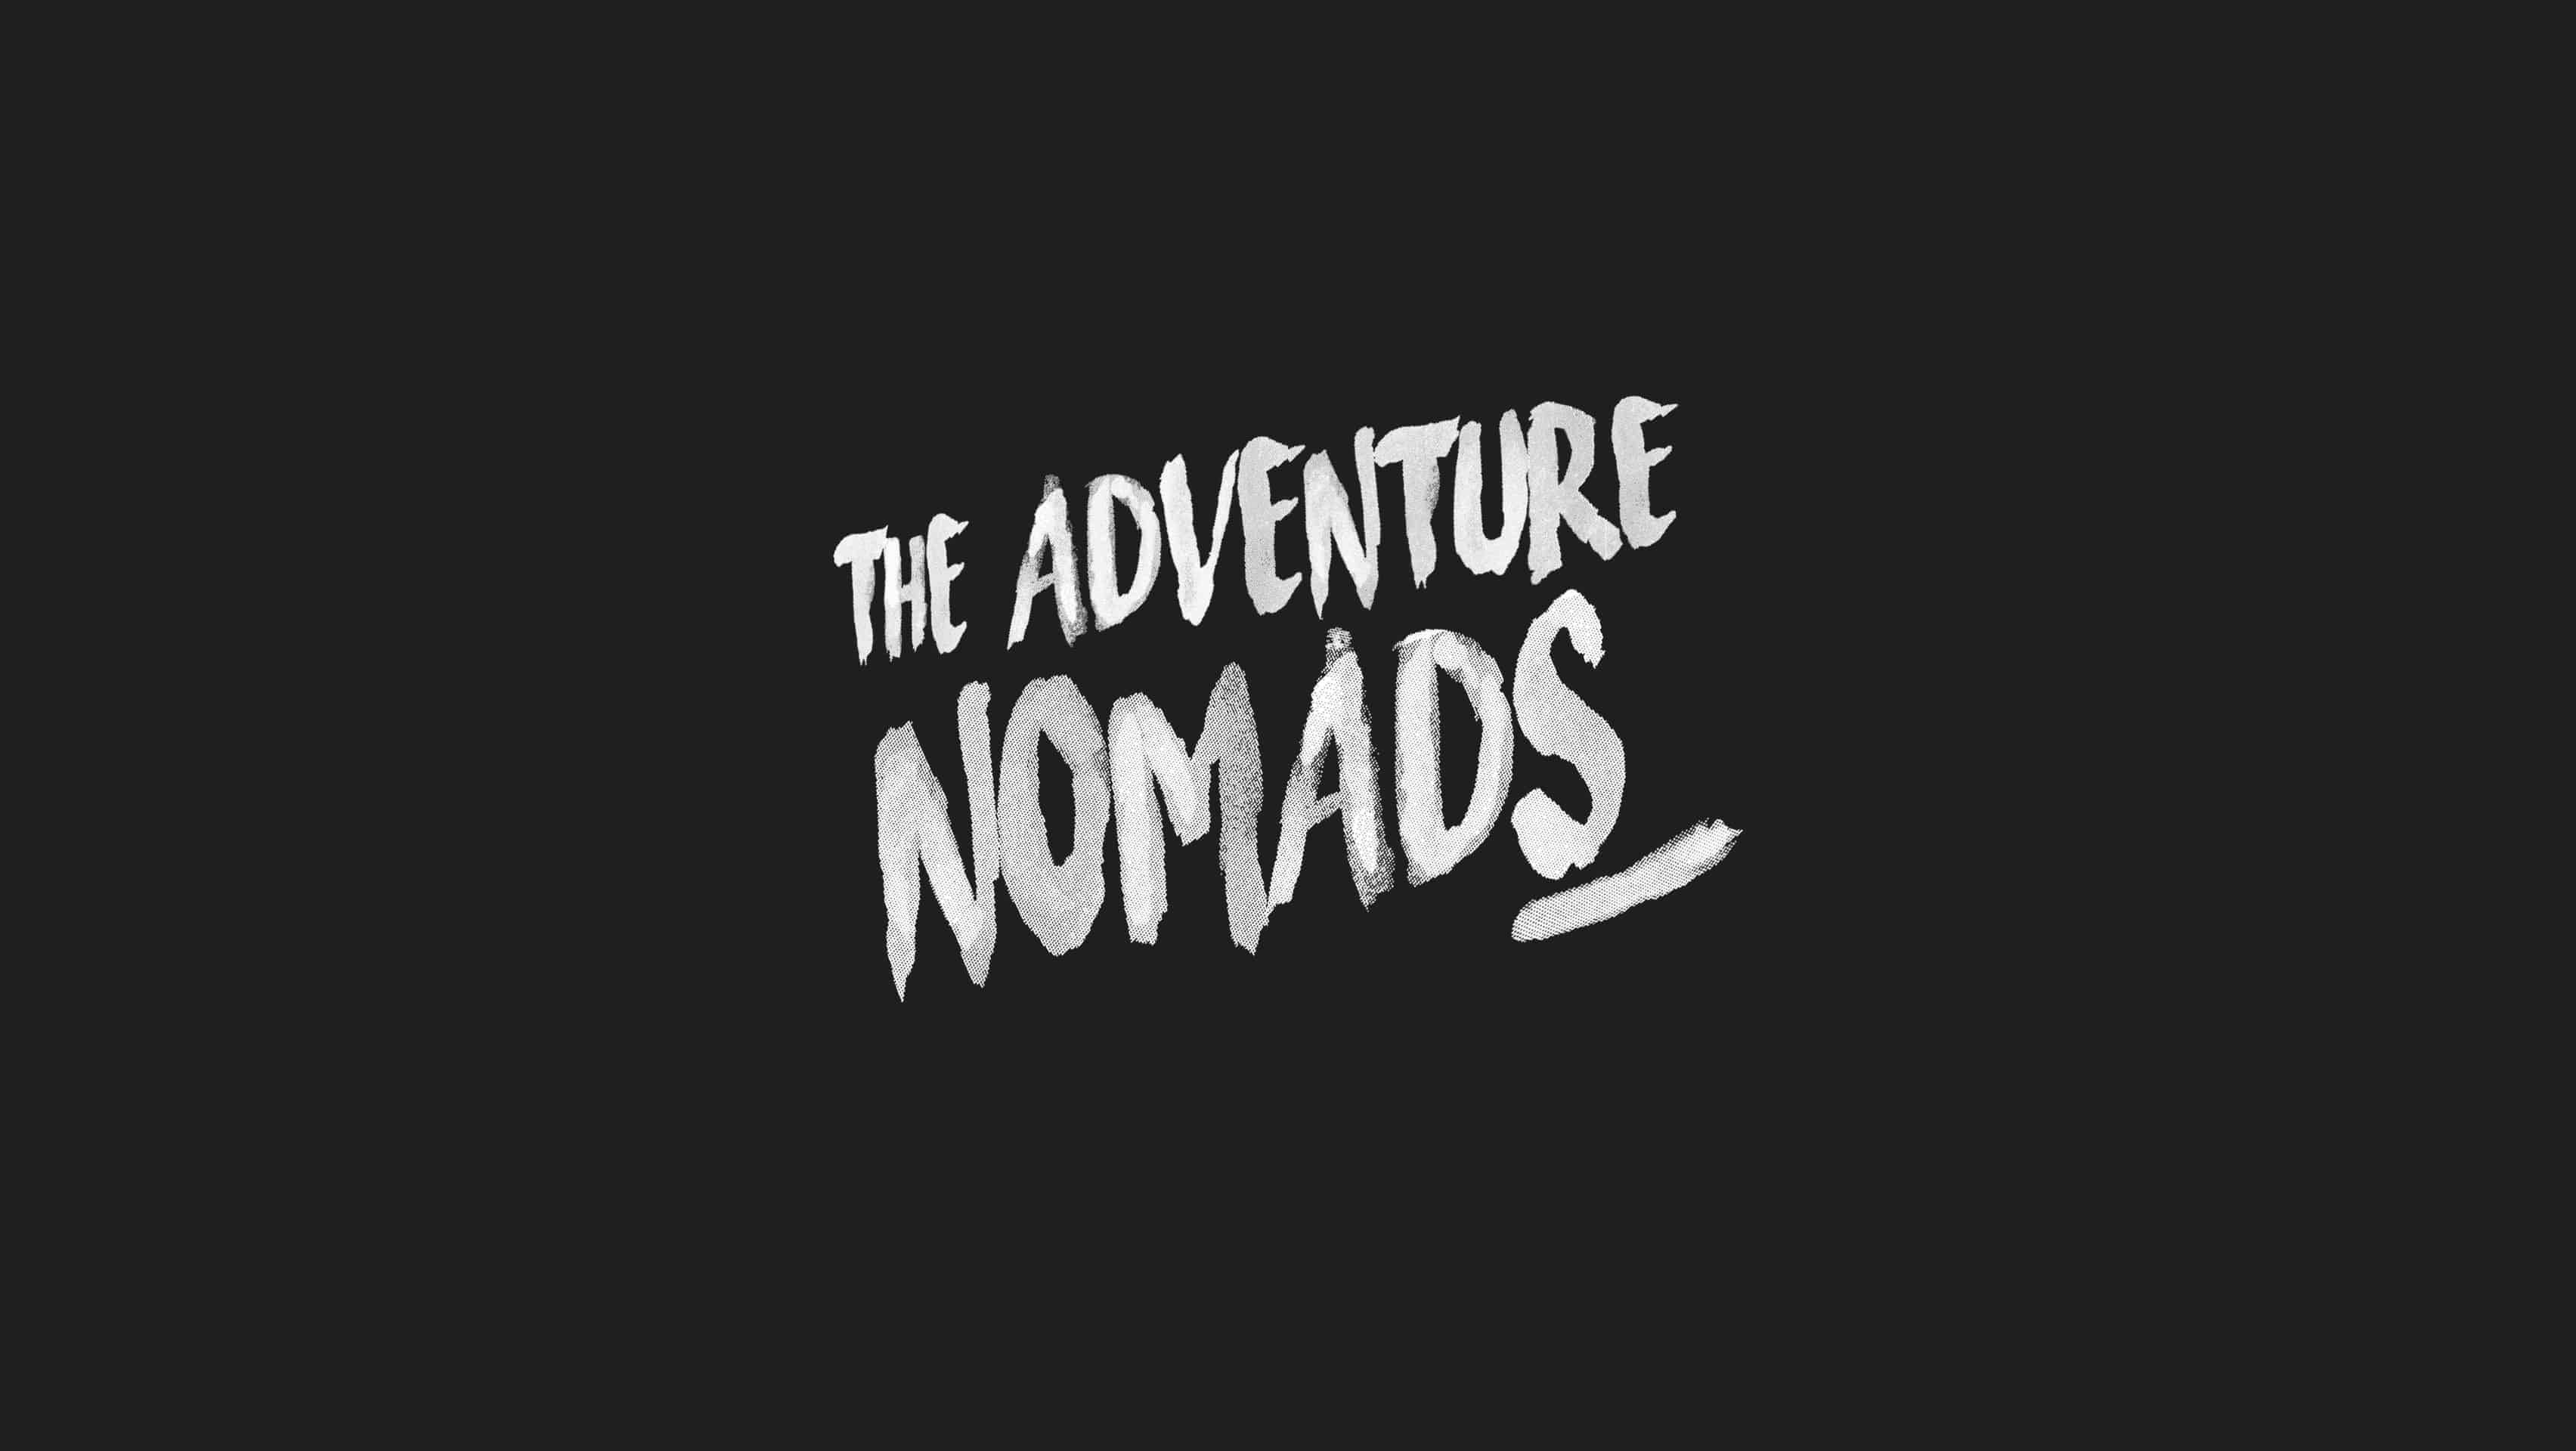 The Adventure Nomads - Image Presentation